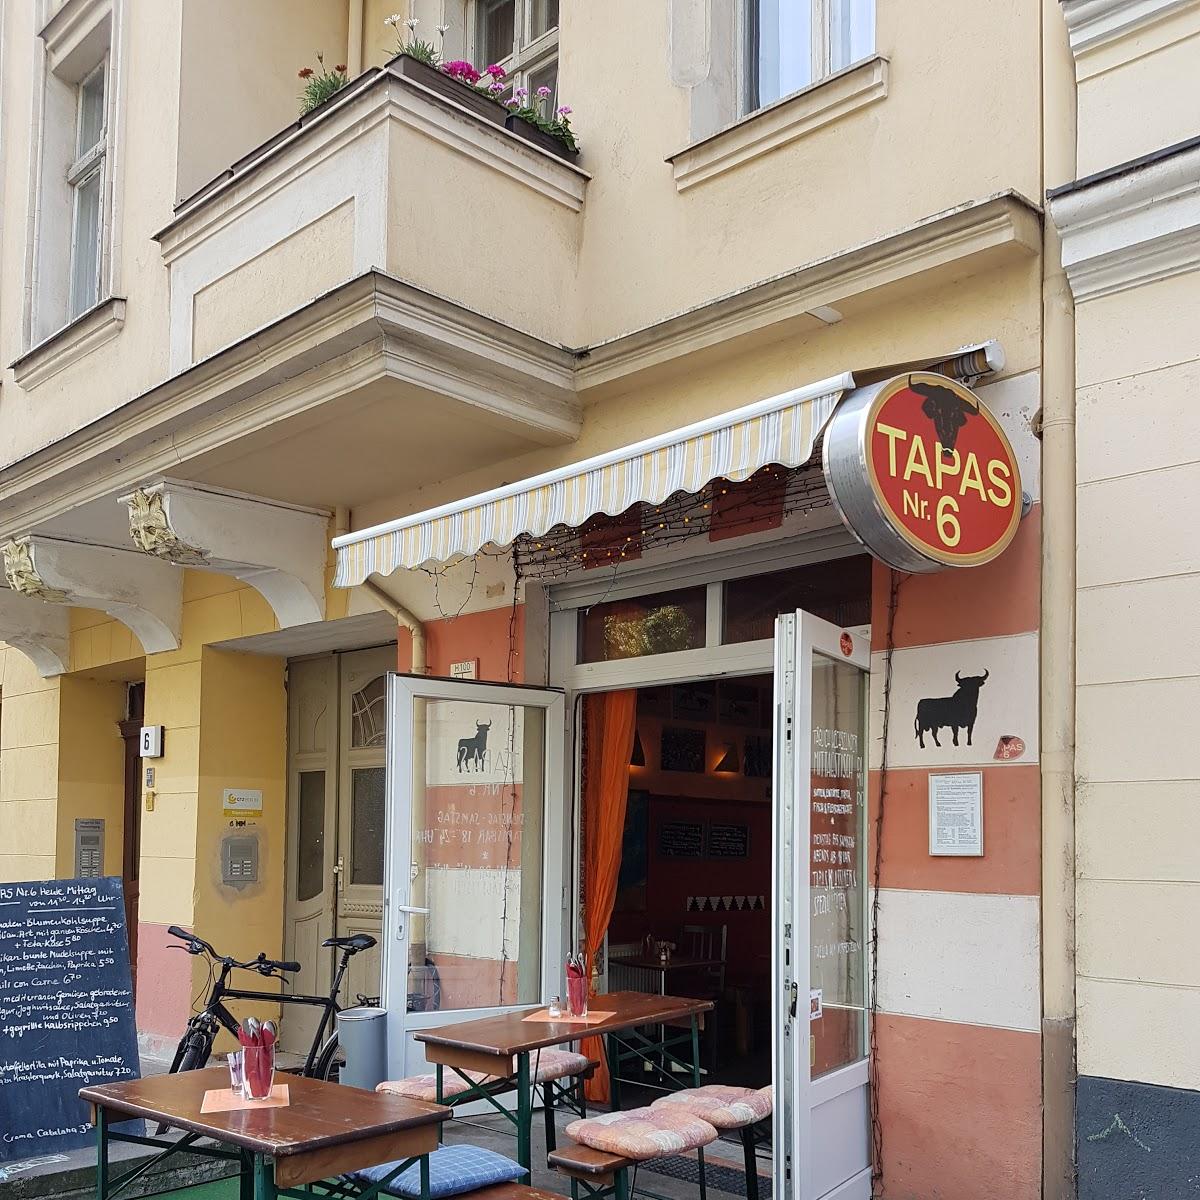 Restaurant "Tapas Nr.6 Tapasbar" in Berlin